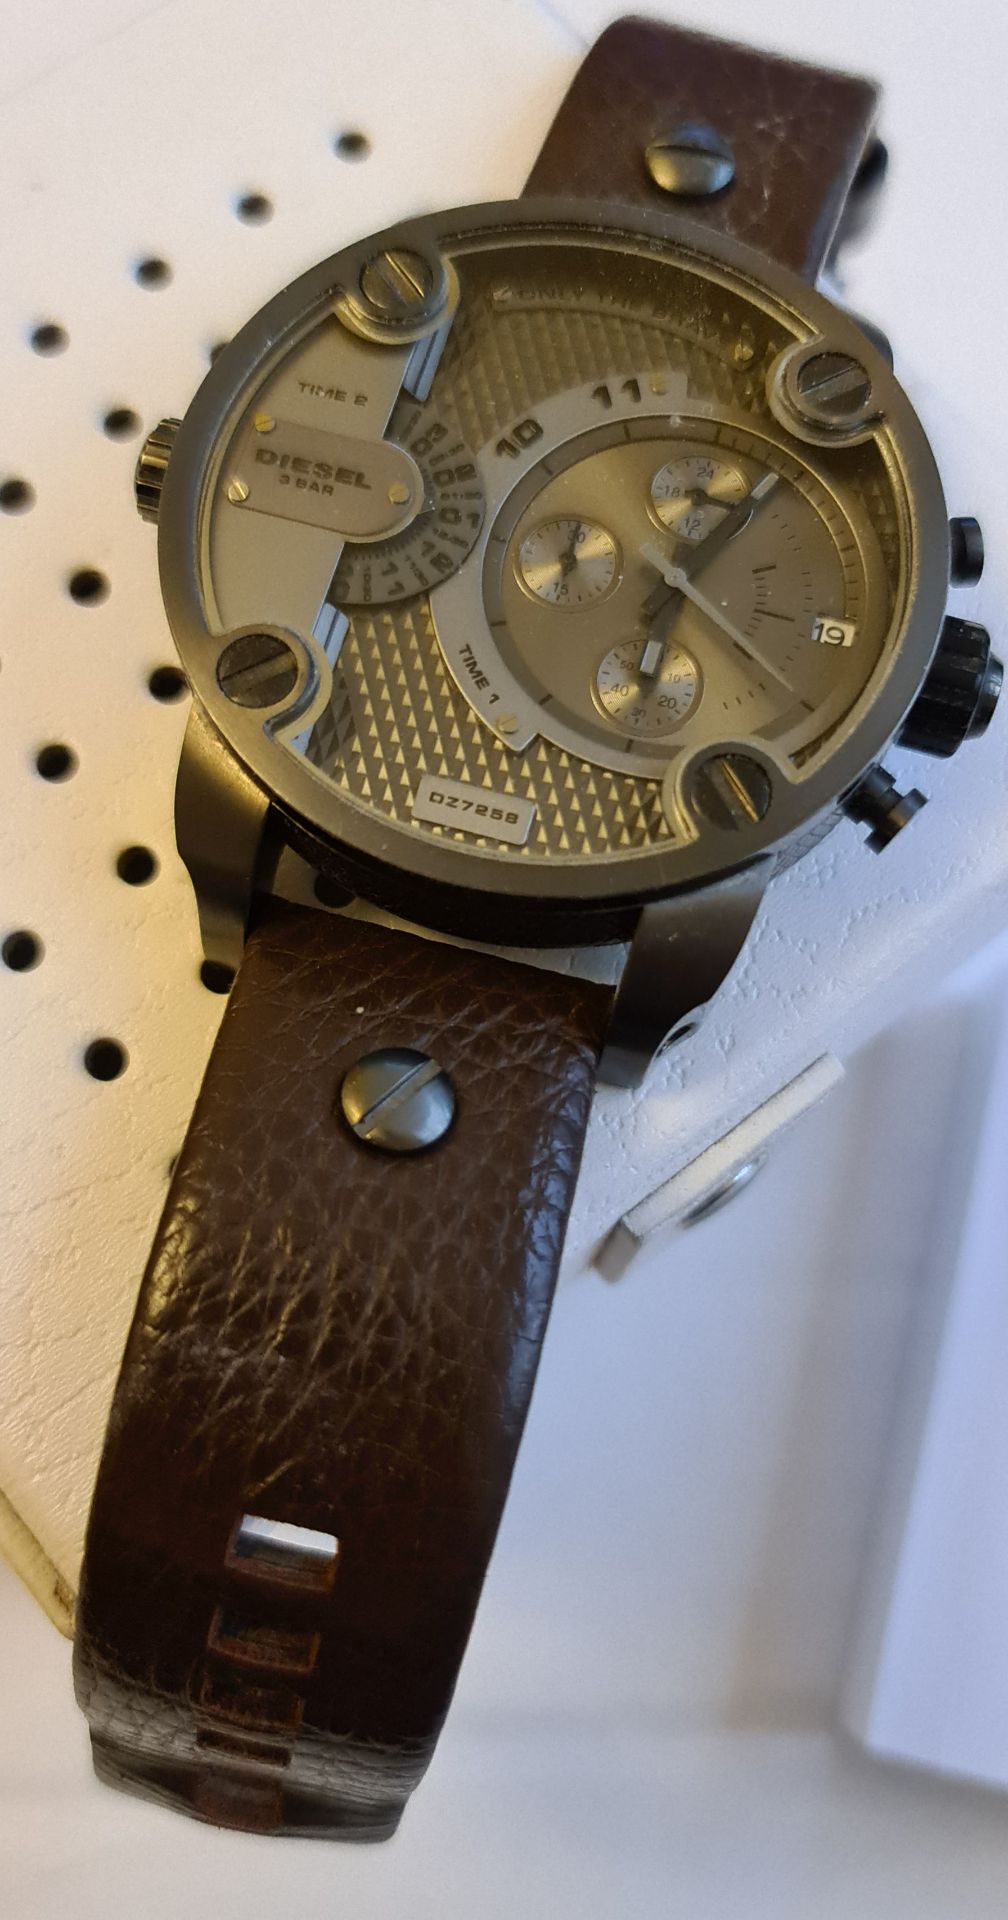 Big daddy graphite grey watch - Image 9 of 9